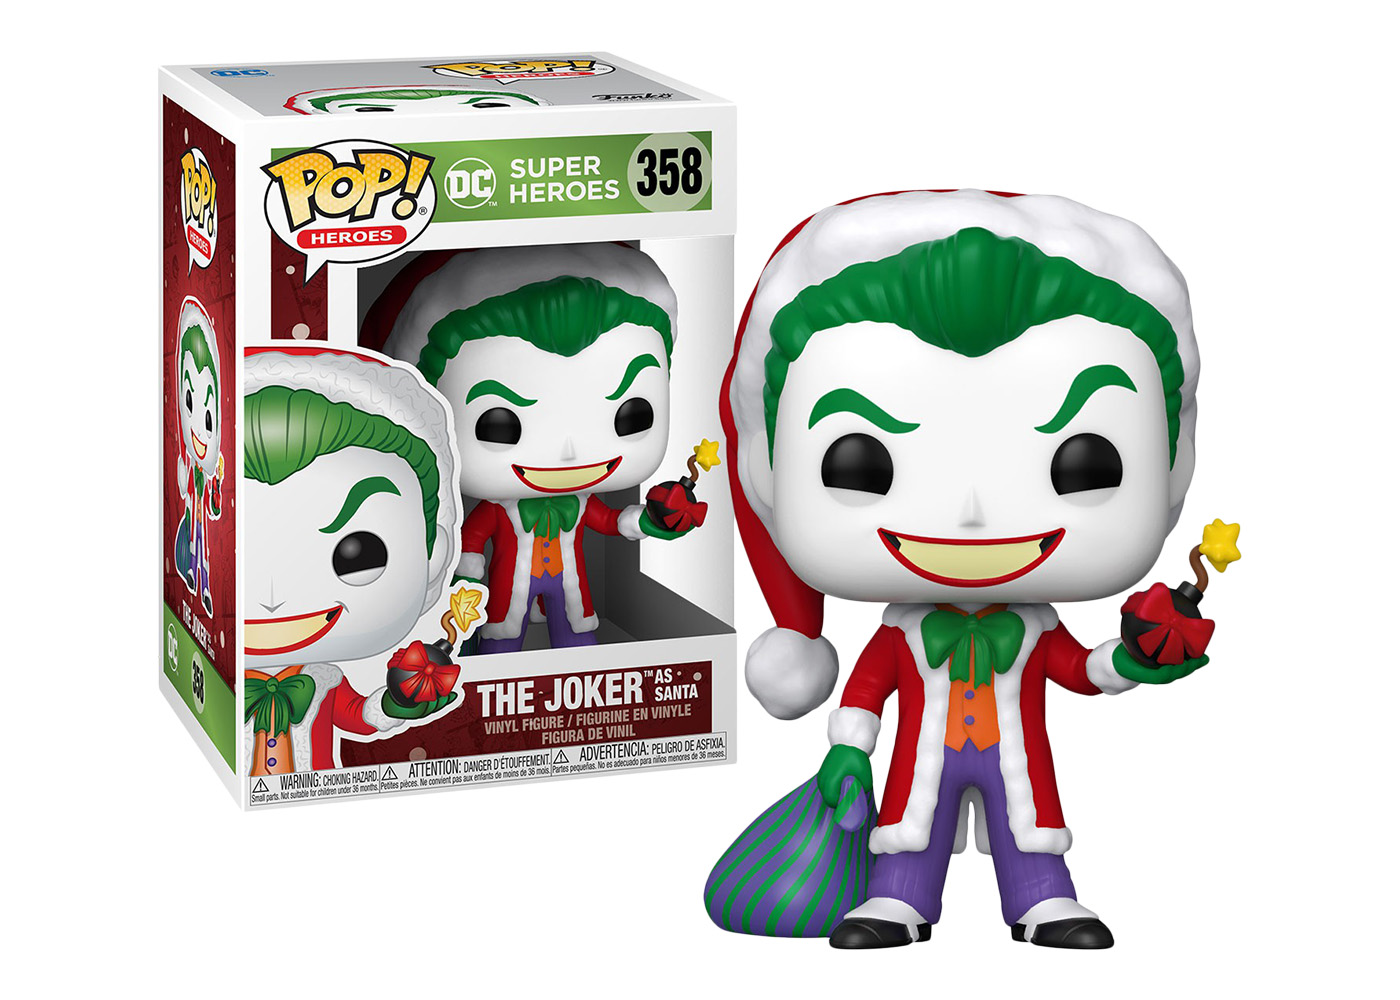 Funko Pop! Heroes DC Super Heroes The Joker (as Jack Frost) Target